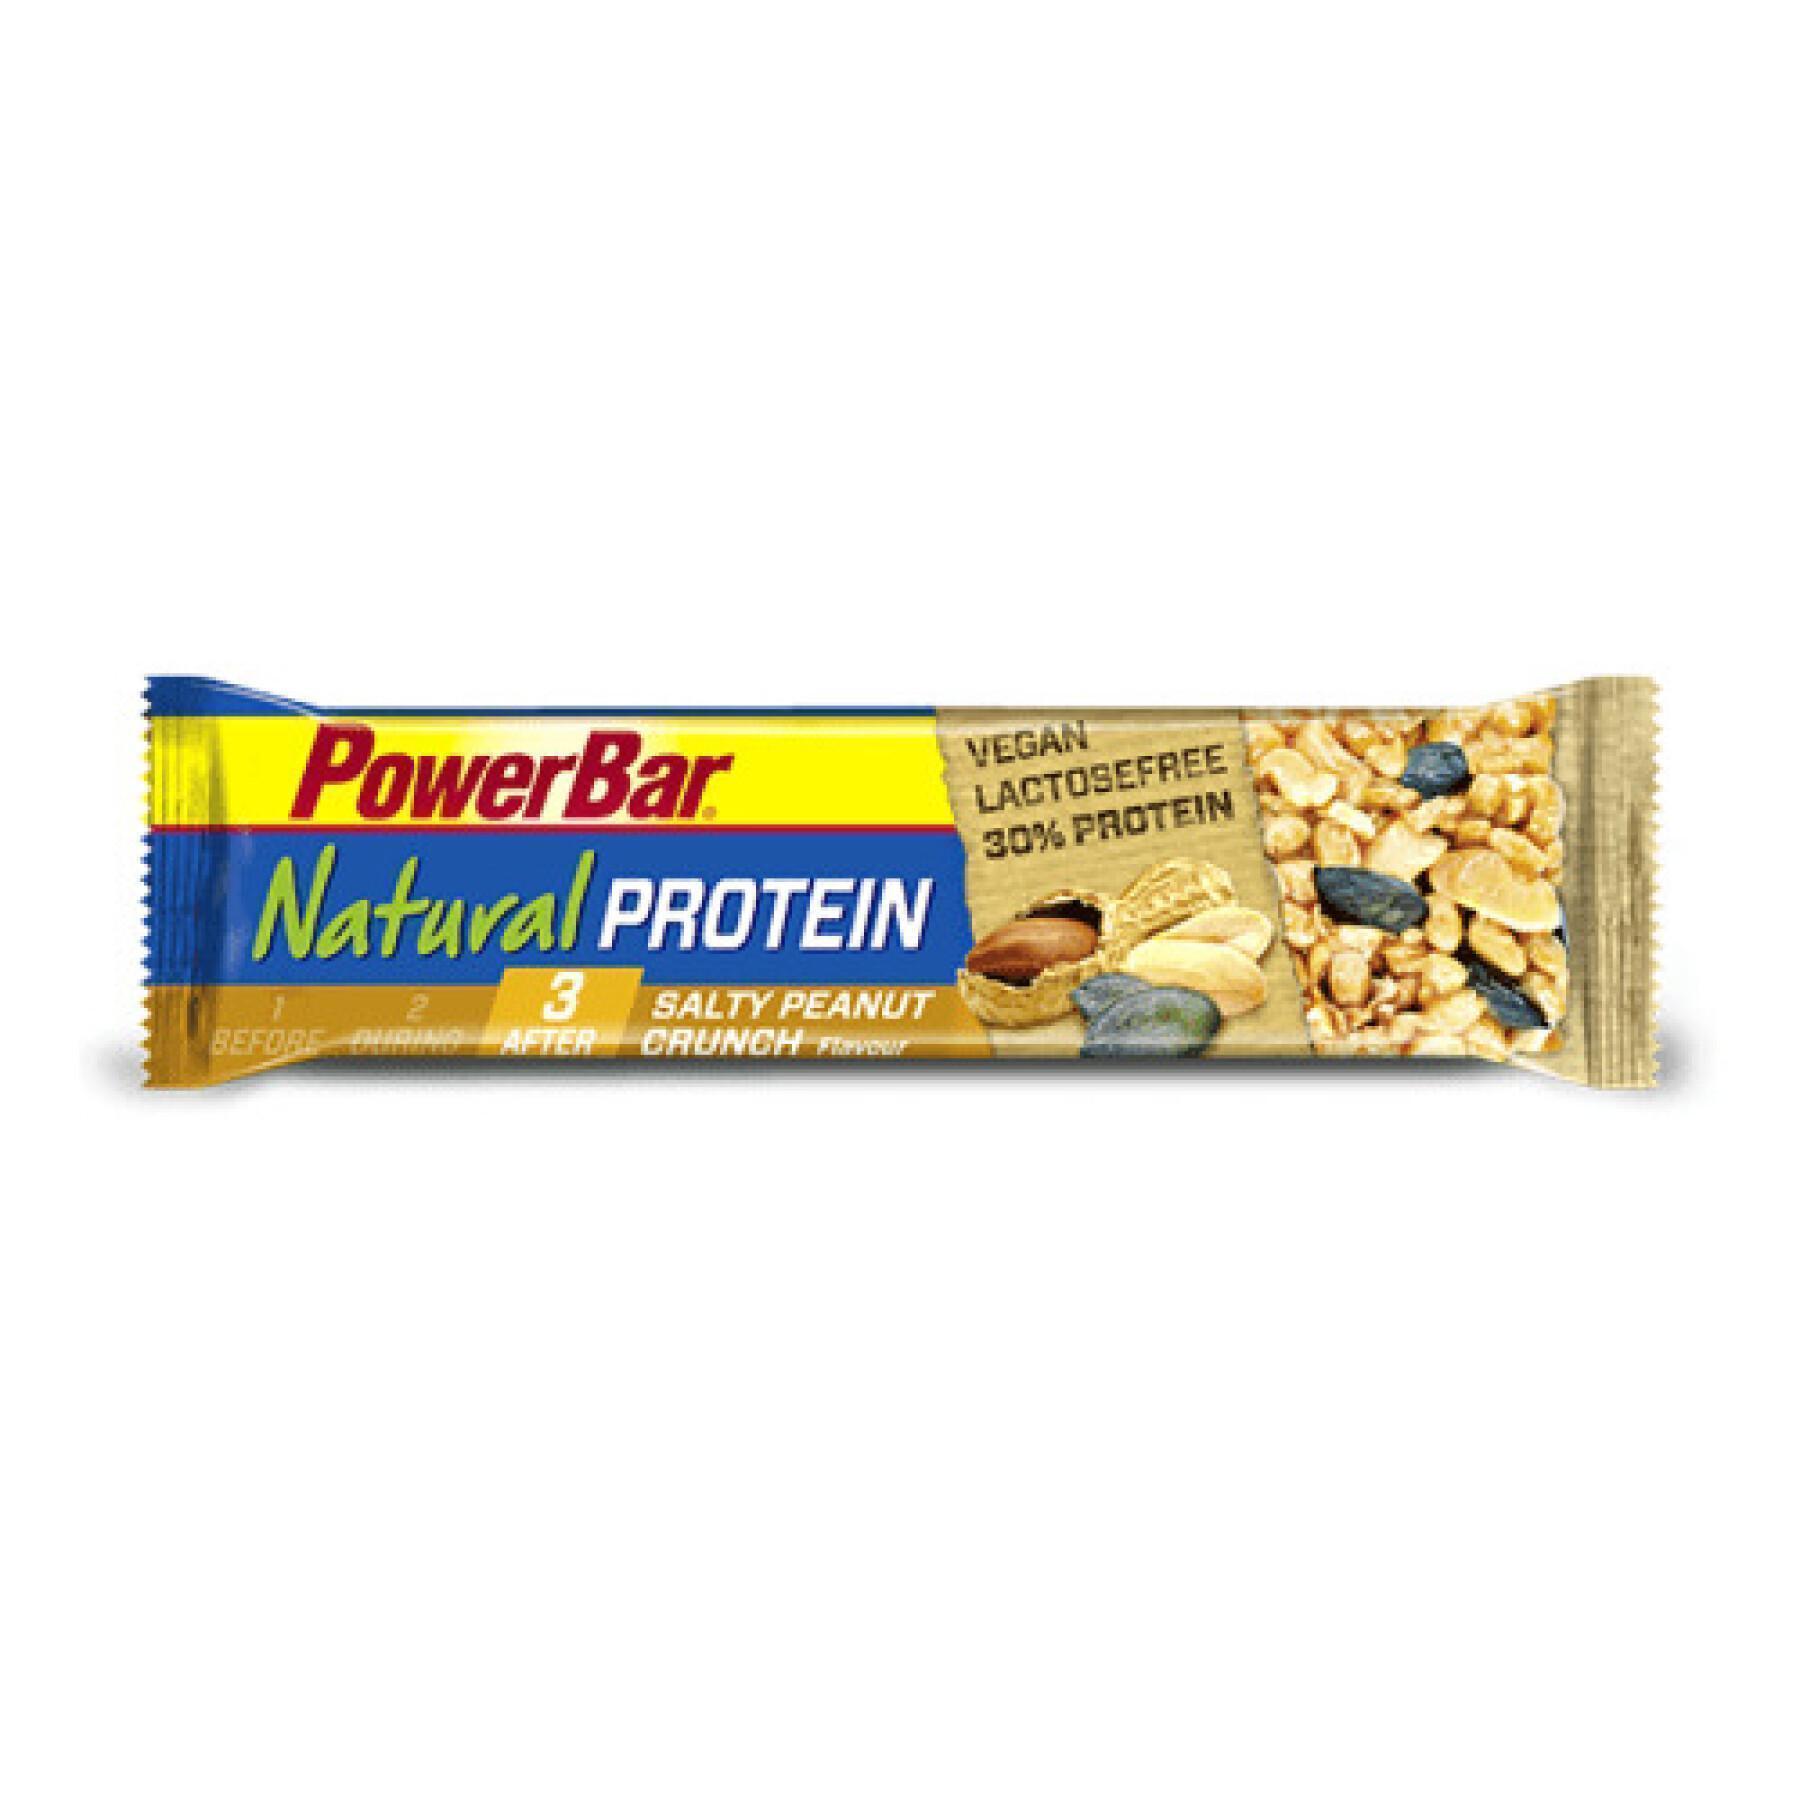 Lote de 24 barras PowerBar Natural Protein Vegan - Salty Peanut Crunch